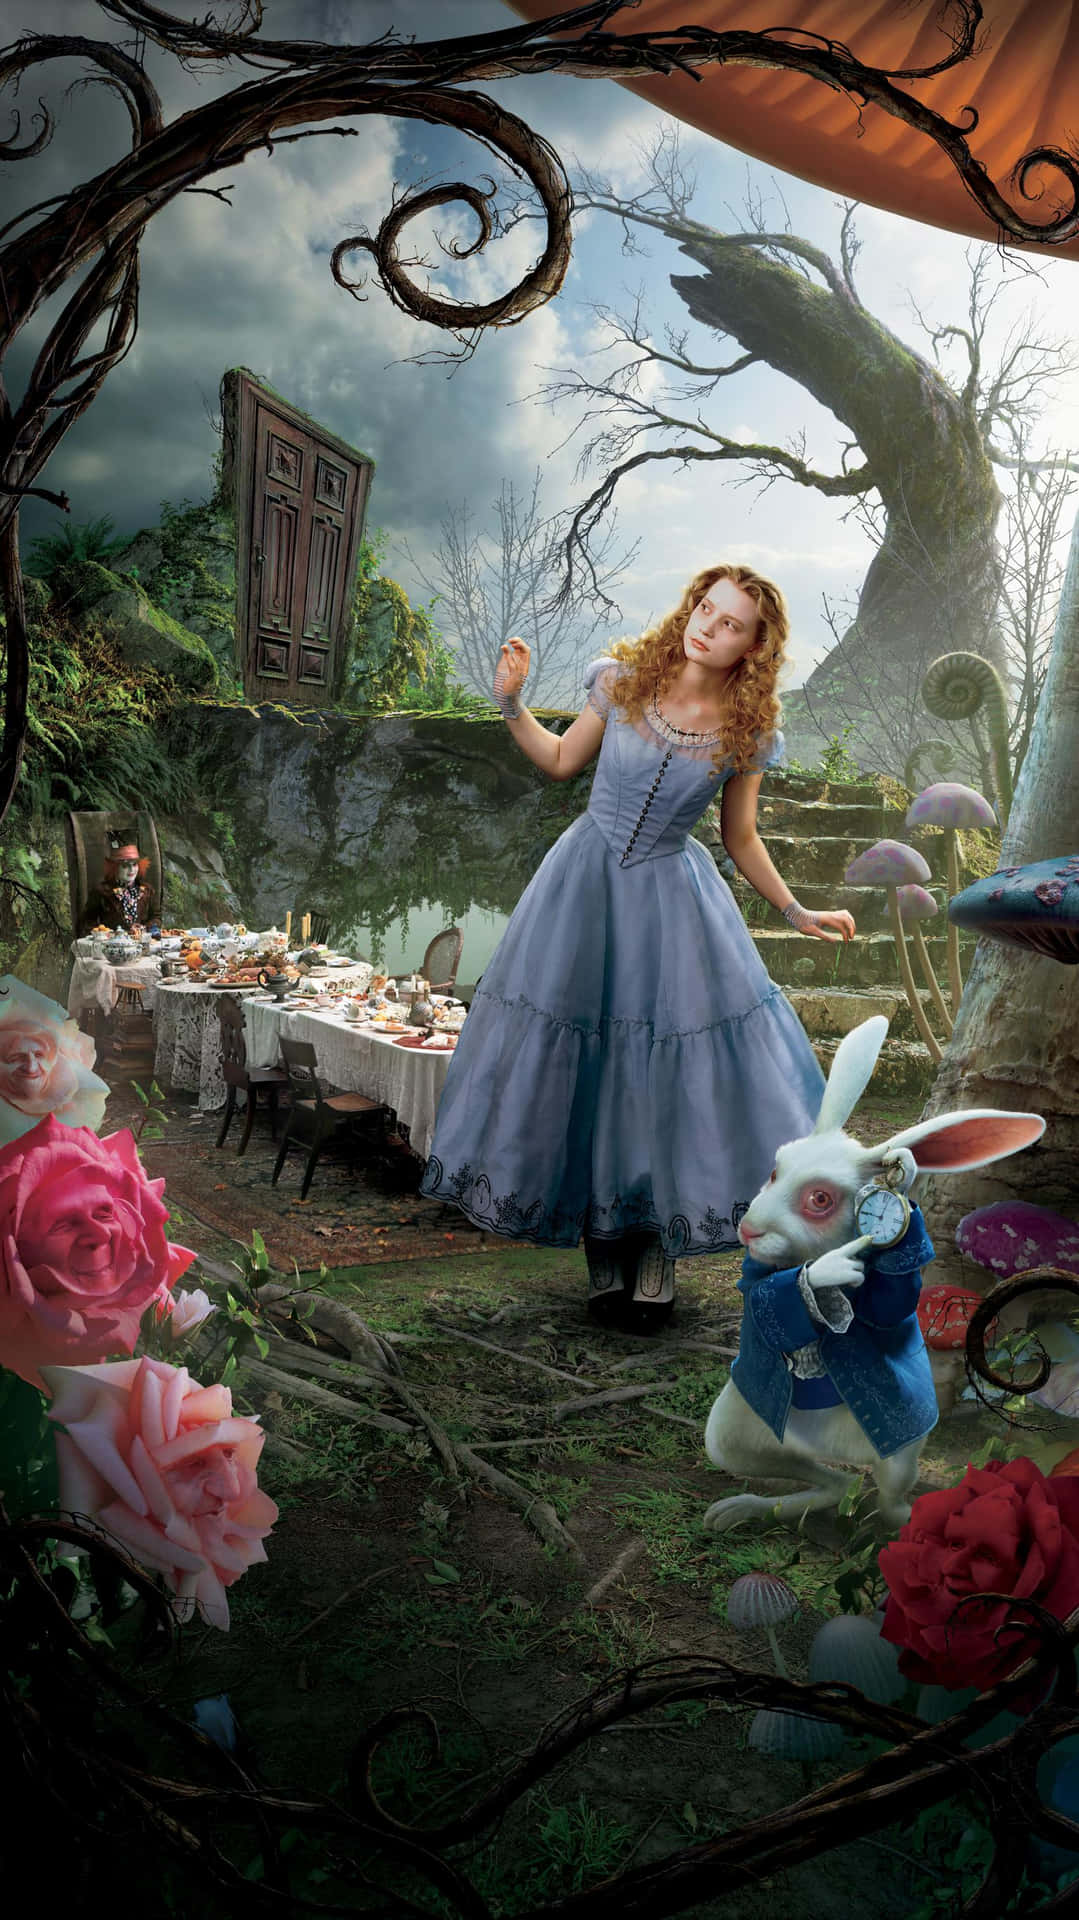 Alice Wonderland Aesthetic Wallpaper